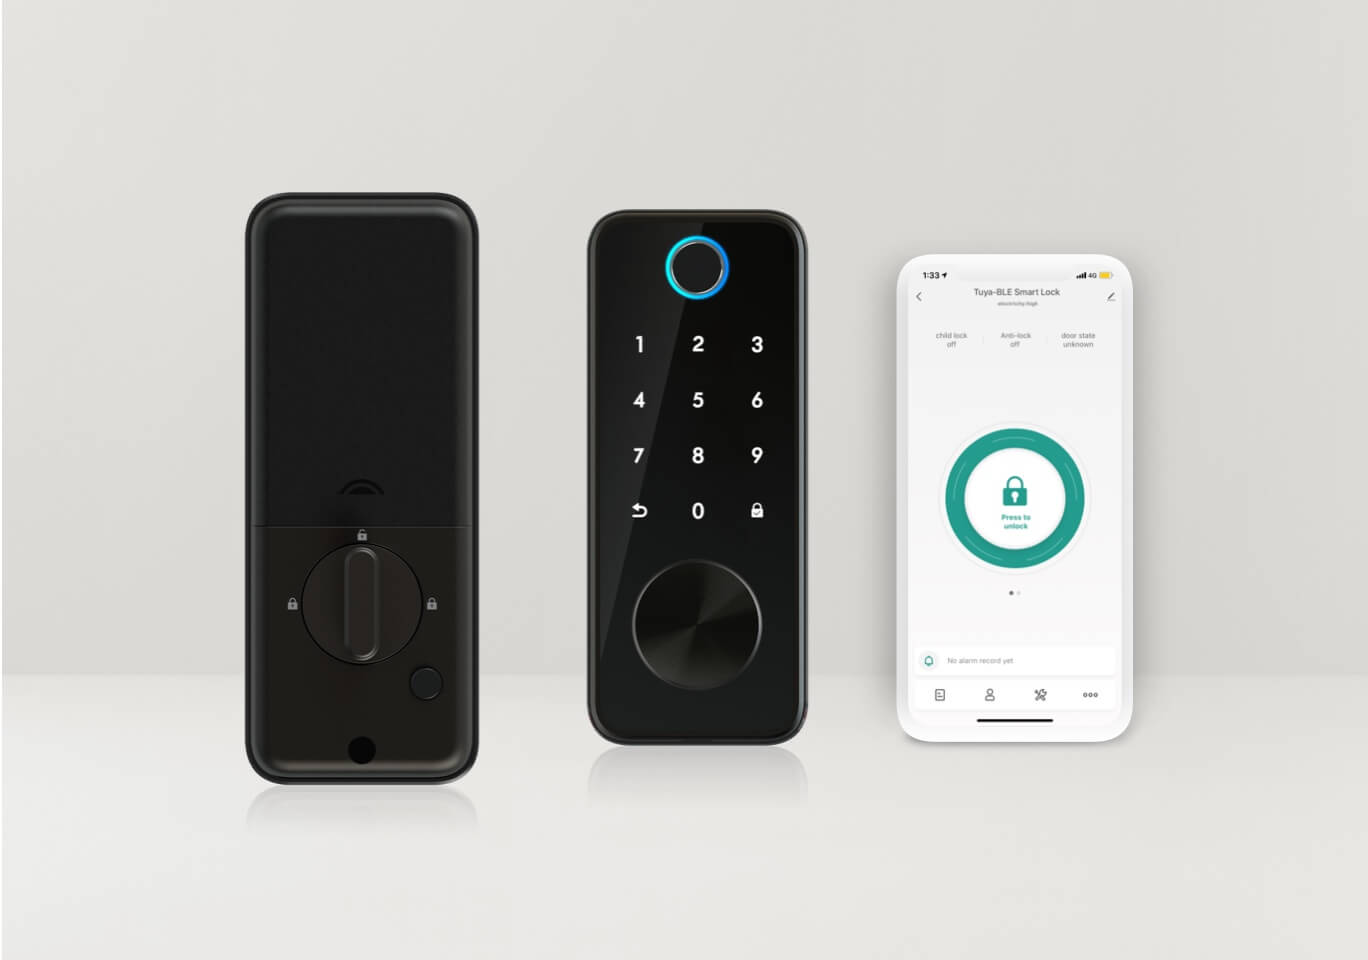 Tuya smart lock gateway with Bluetooth and Wifi